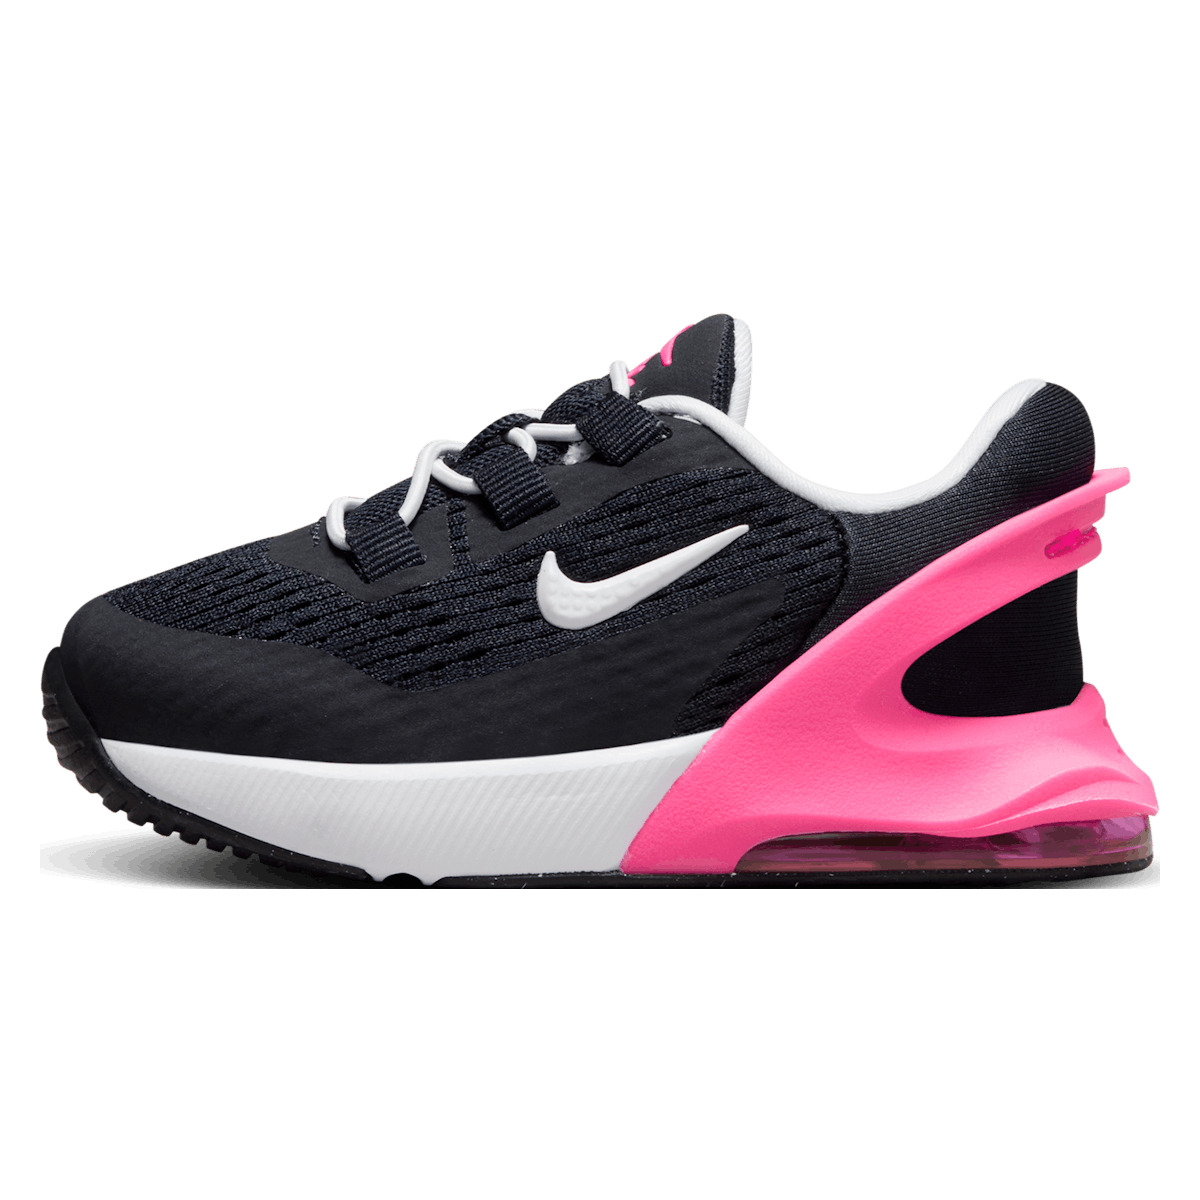 Nike Air Max 270 GO TD "Fierce Pink"